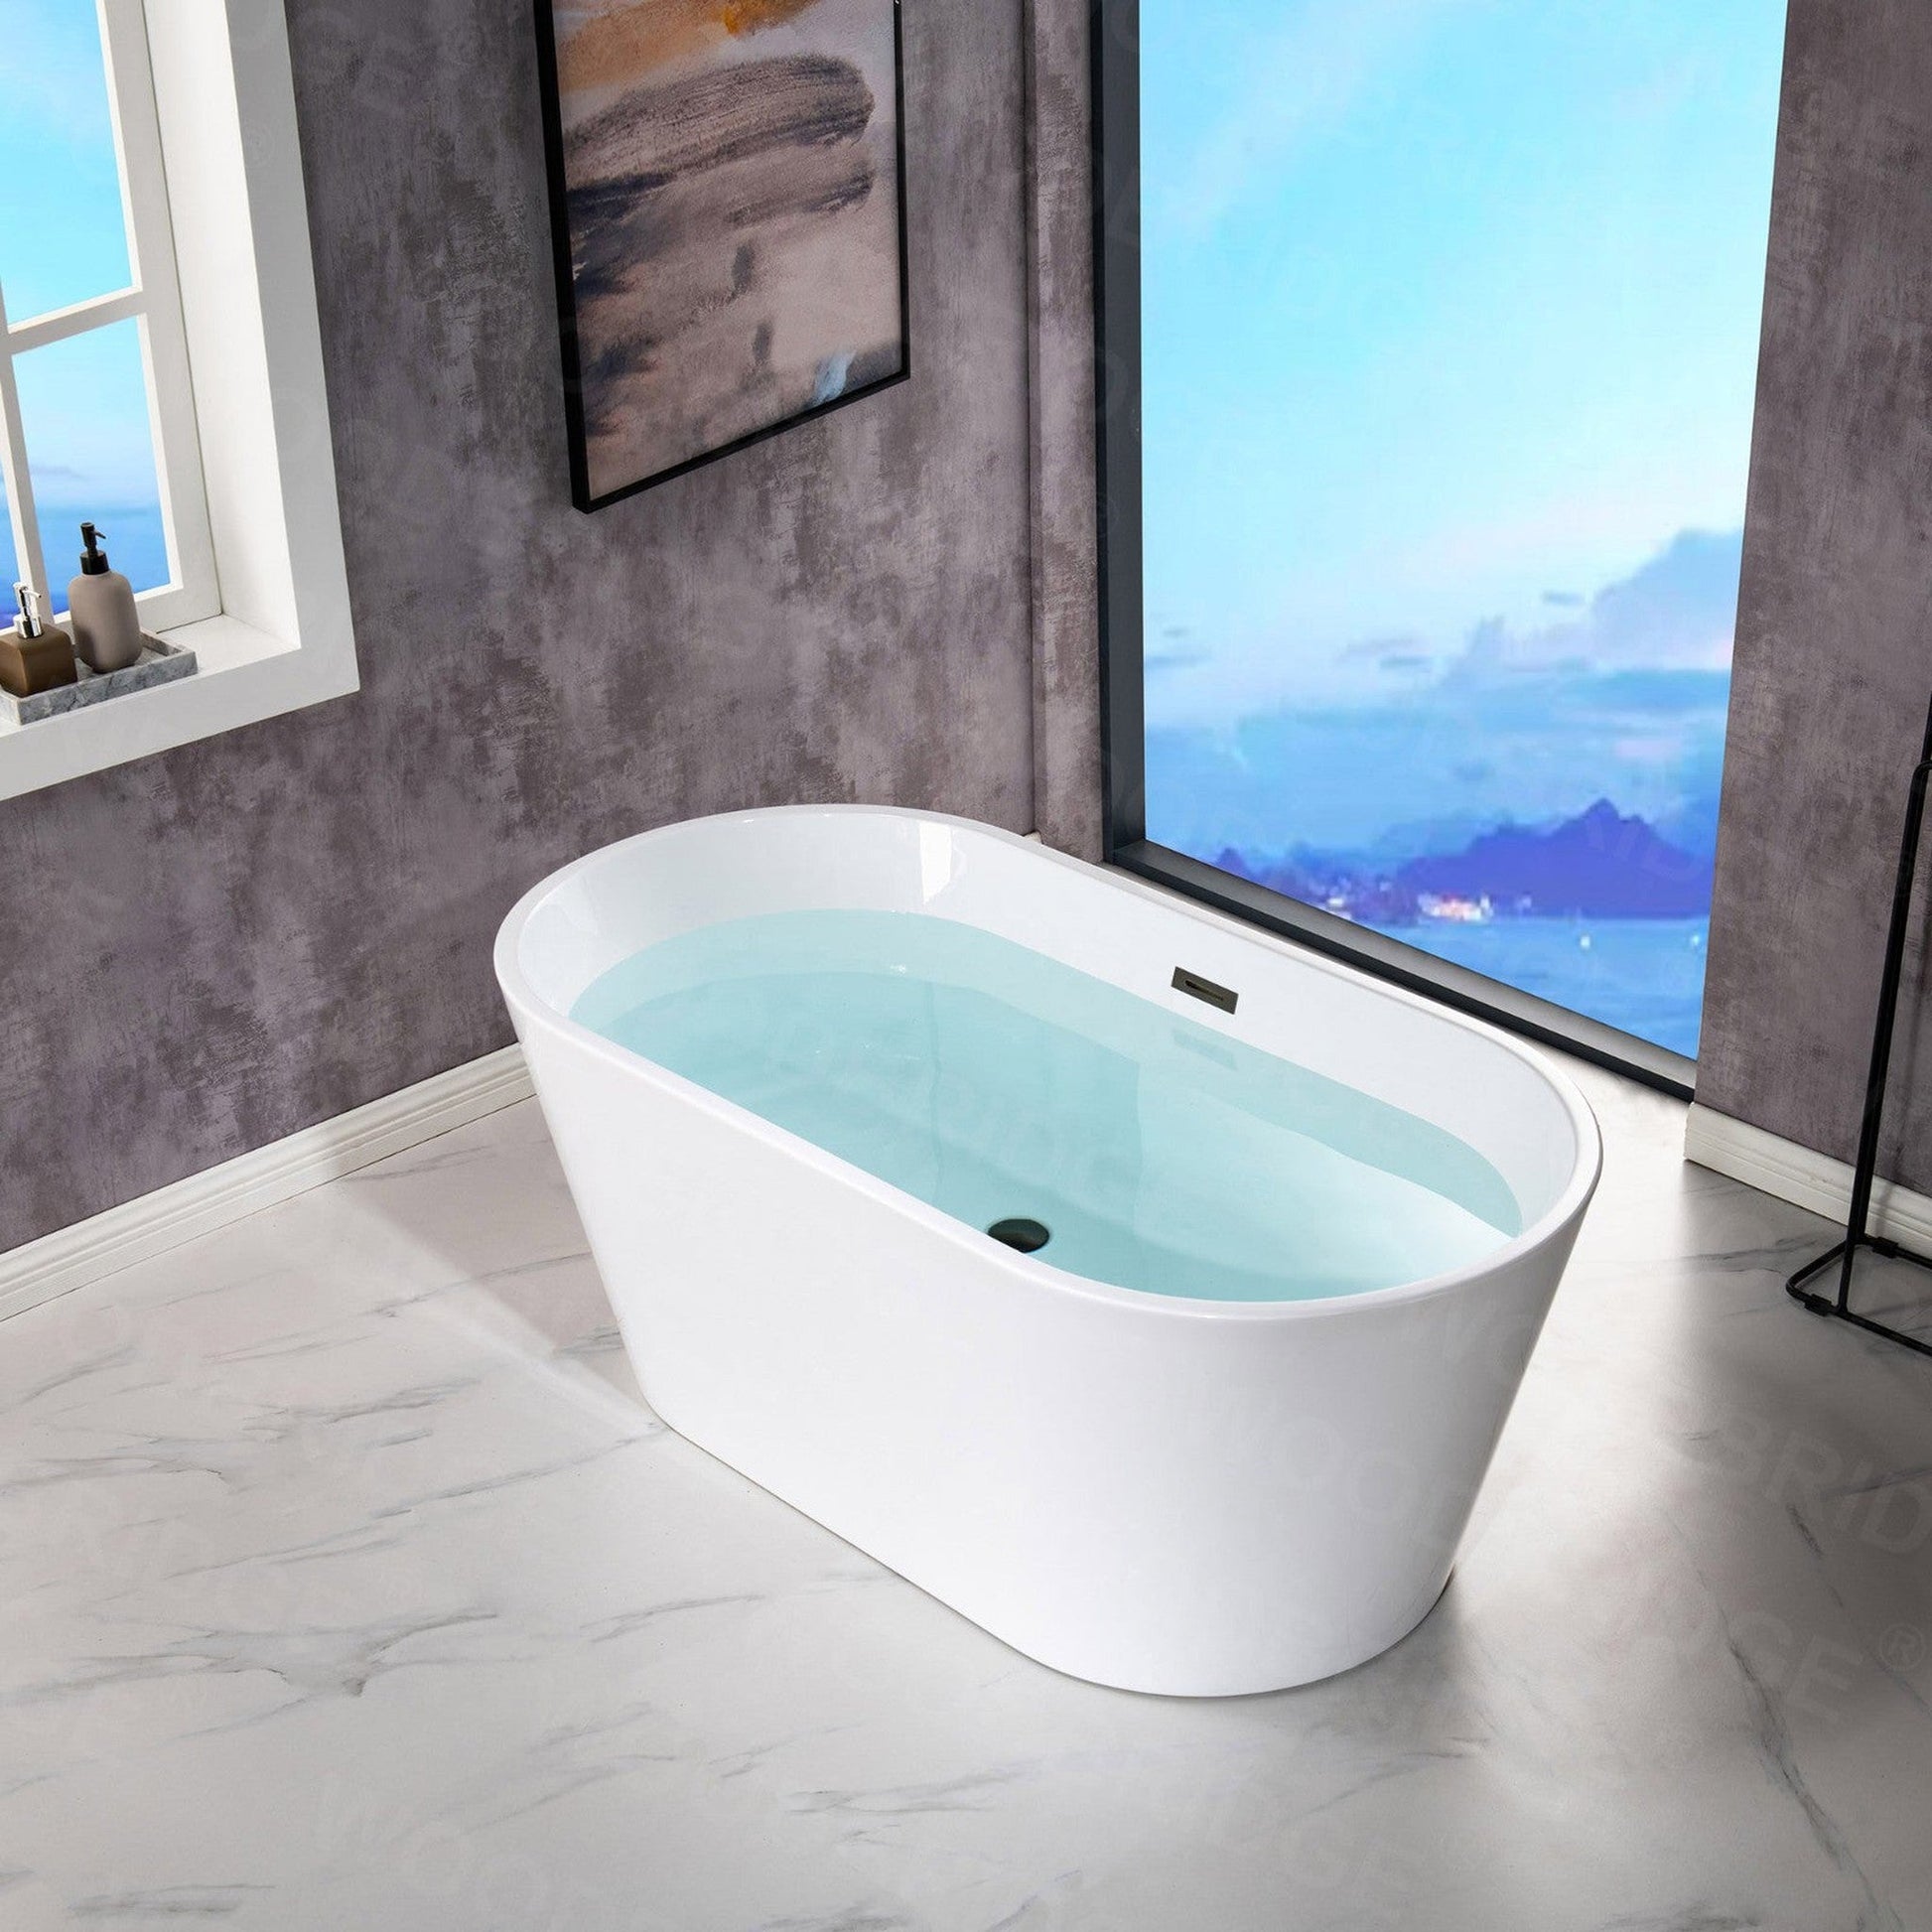 WoodBridge B1702 54" White Acrylic Freestanding Soaking Bathtub With Matte Black Drain, Overflow, F0072MBSQ Tub Filler and Caddy Tray